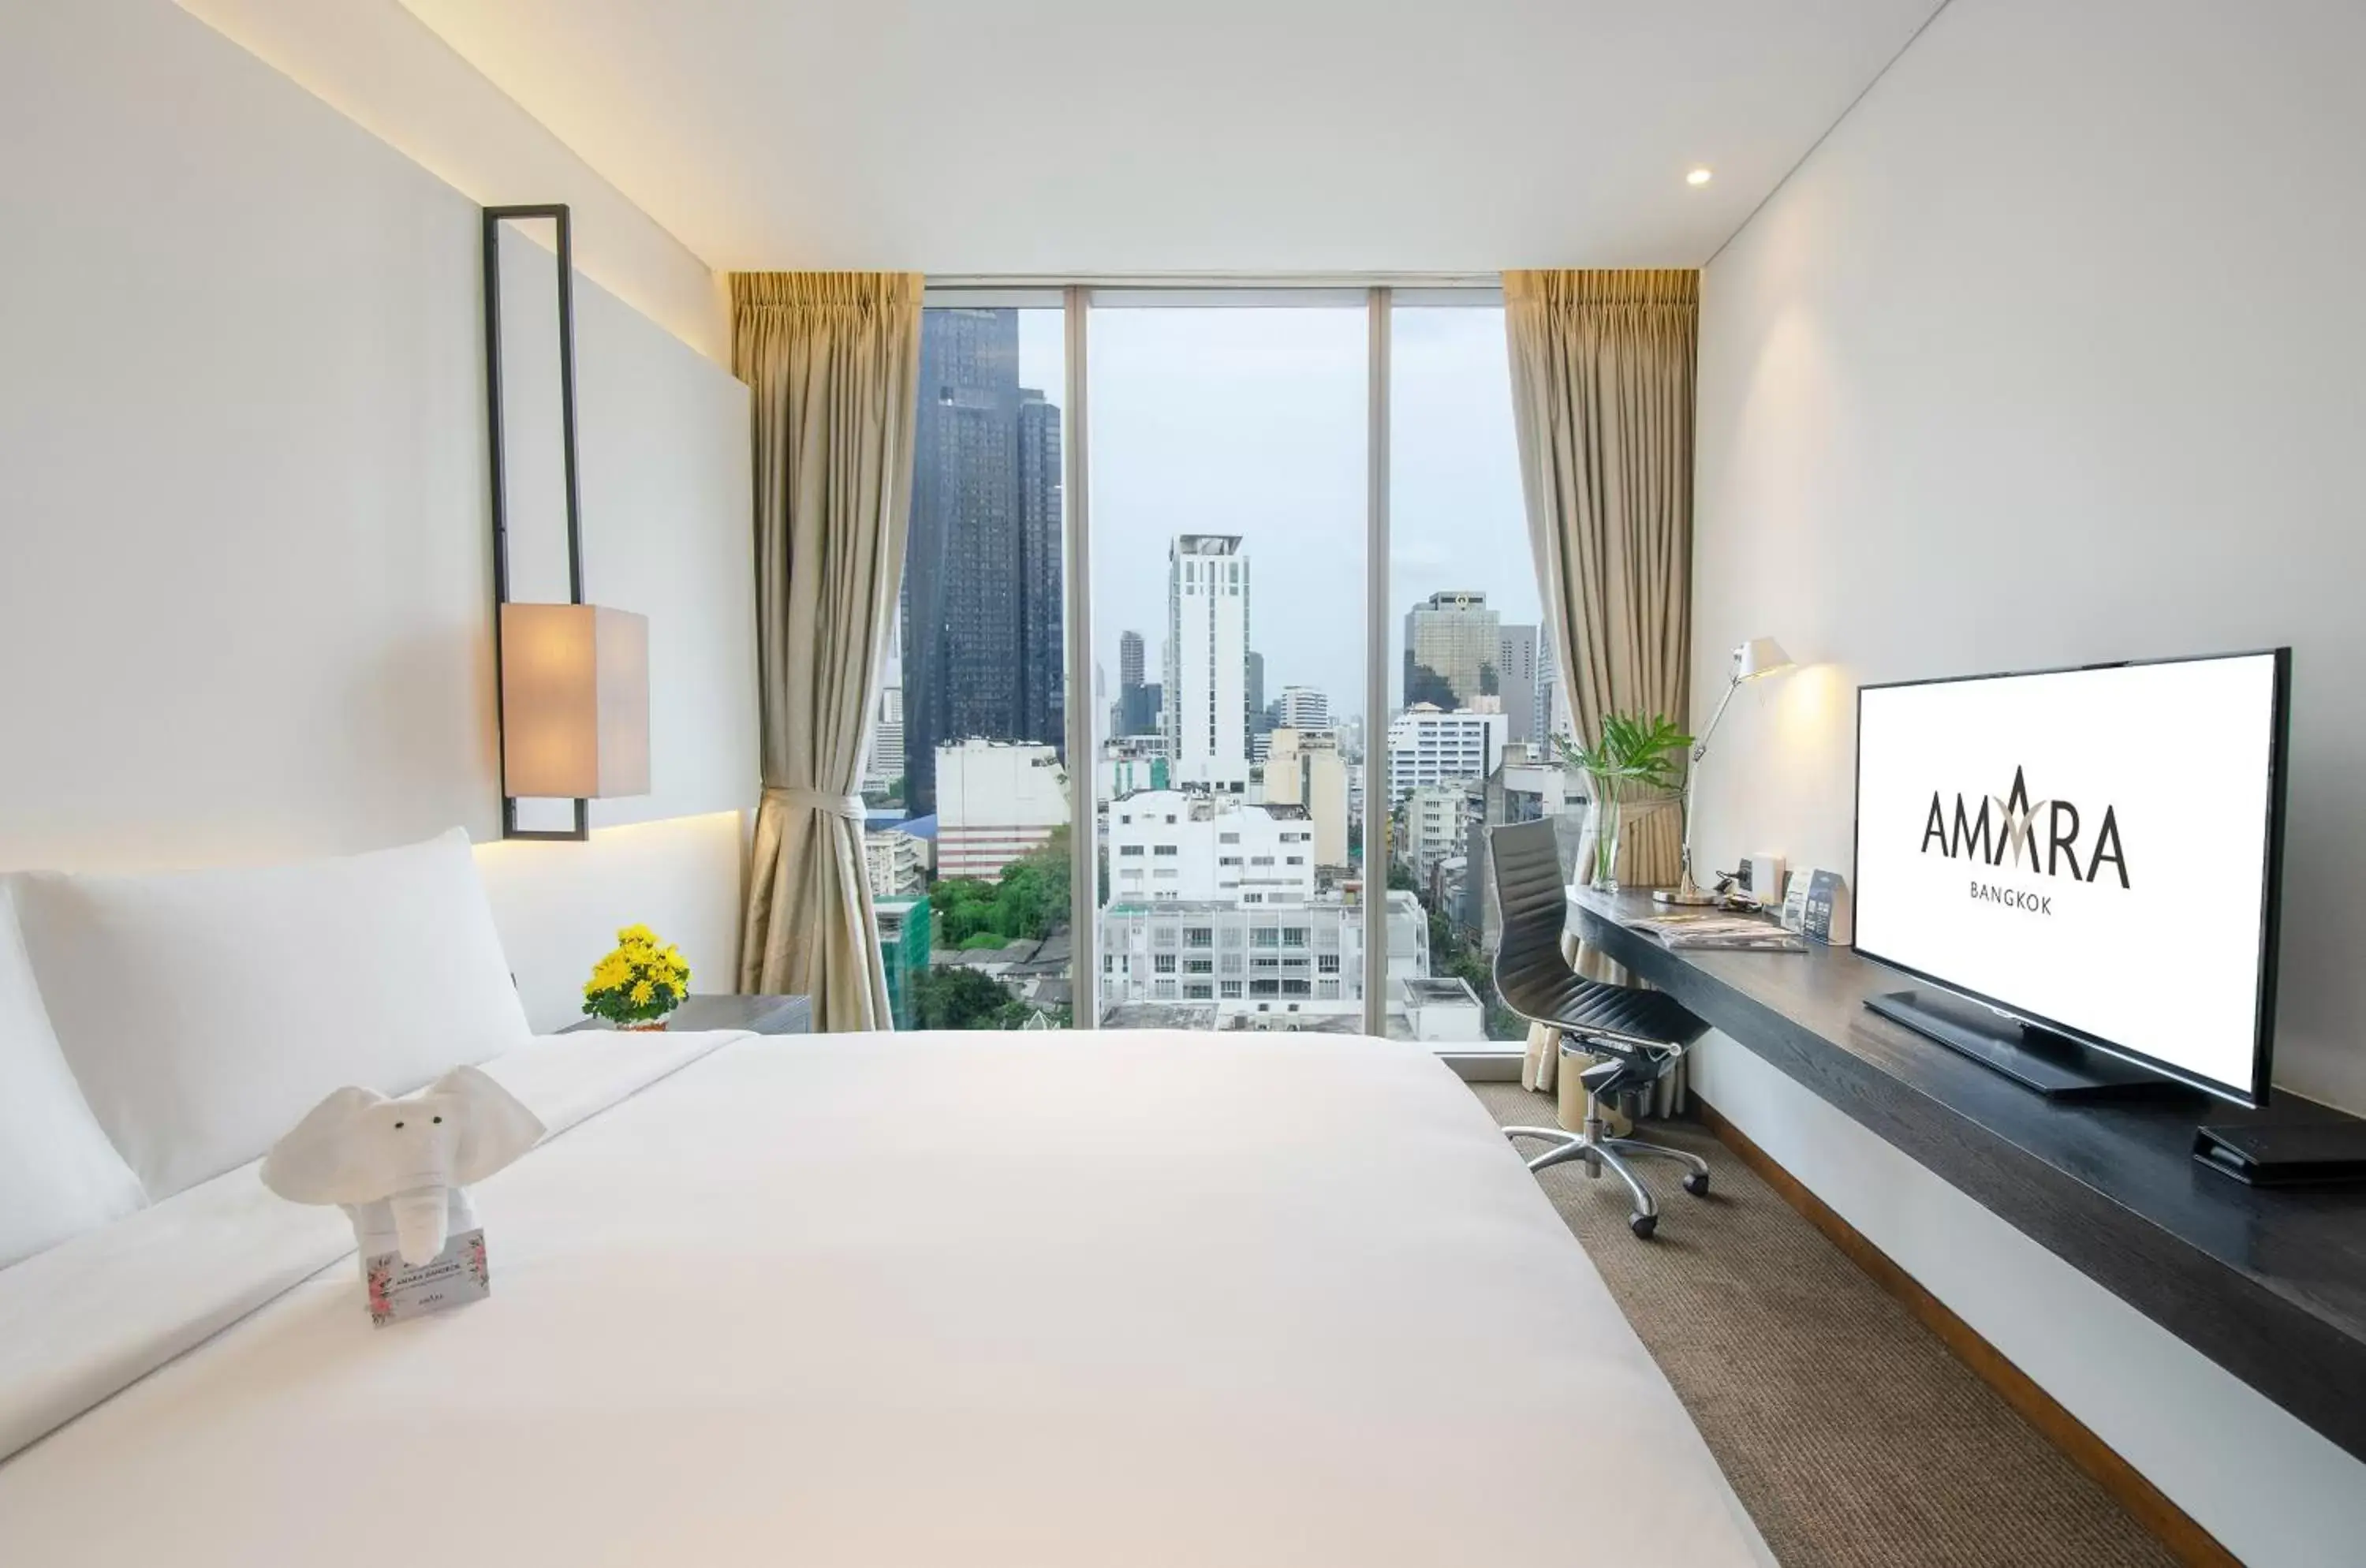 Bedroom in Amara Bangkok Hotel